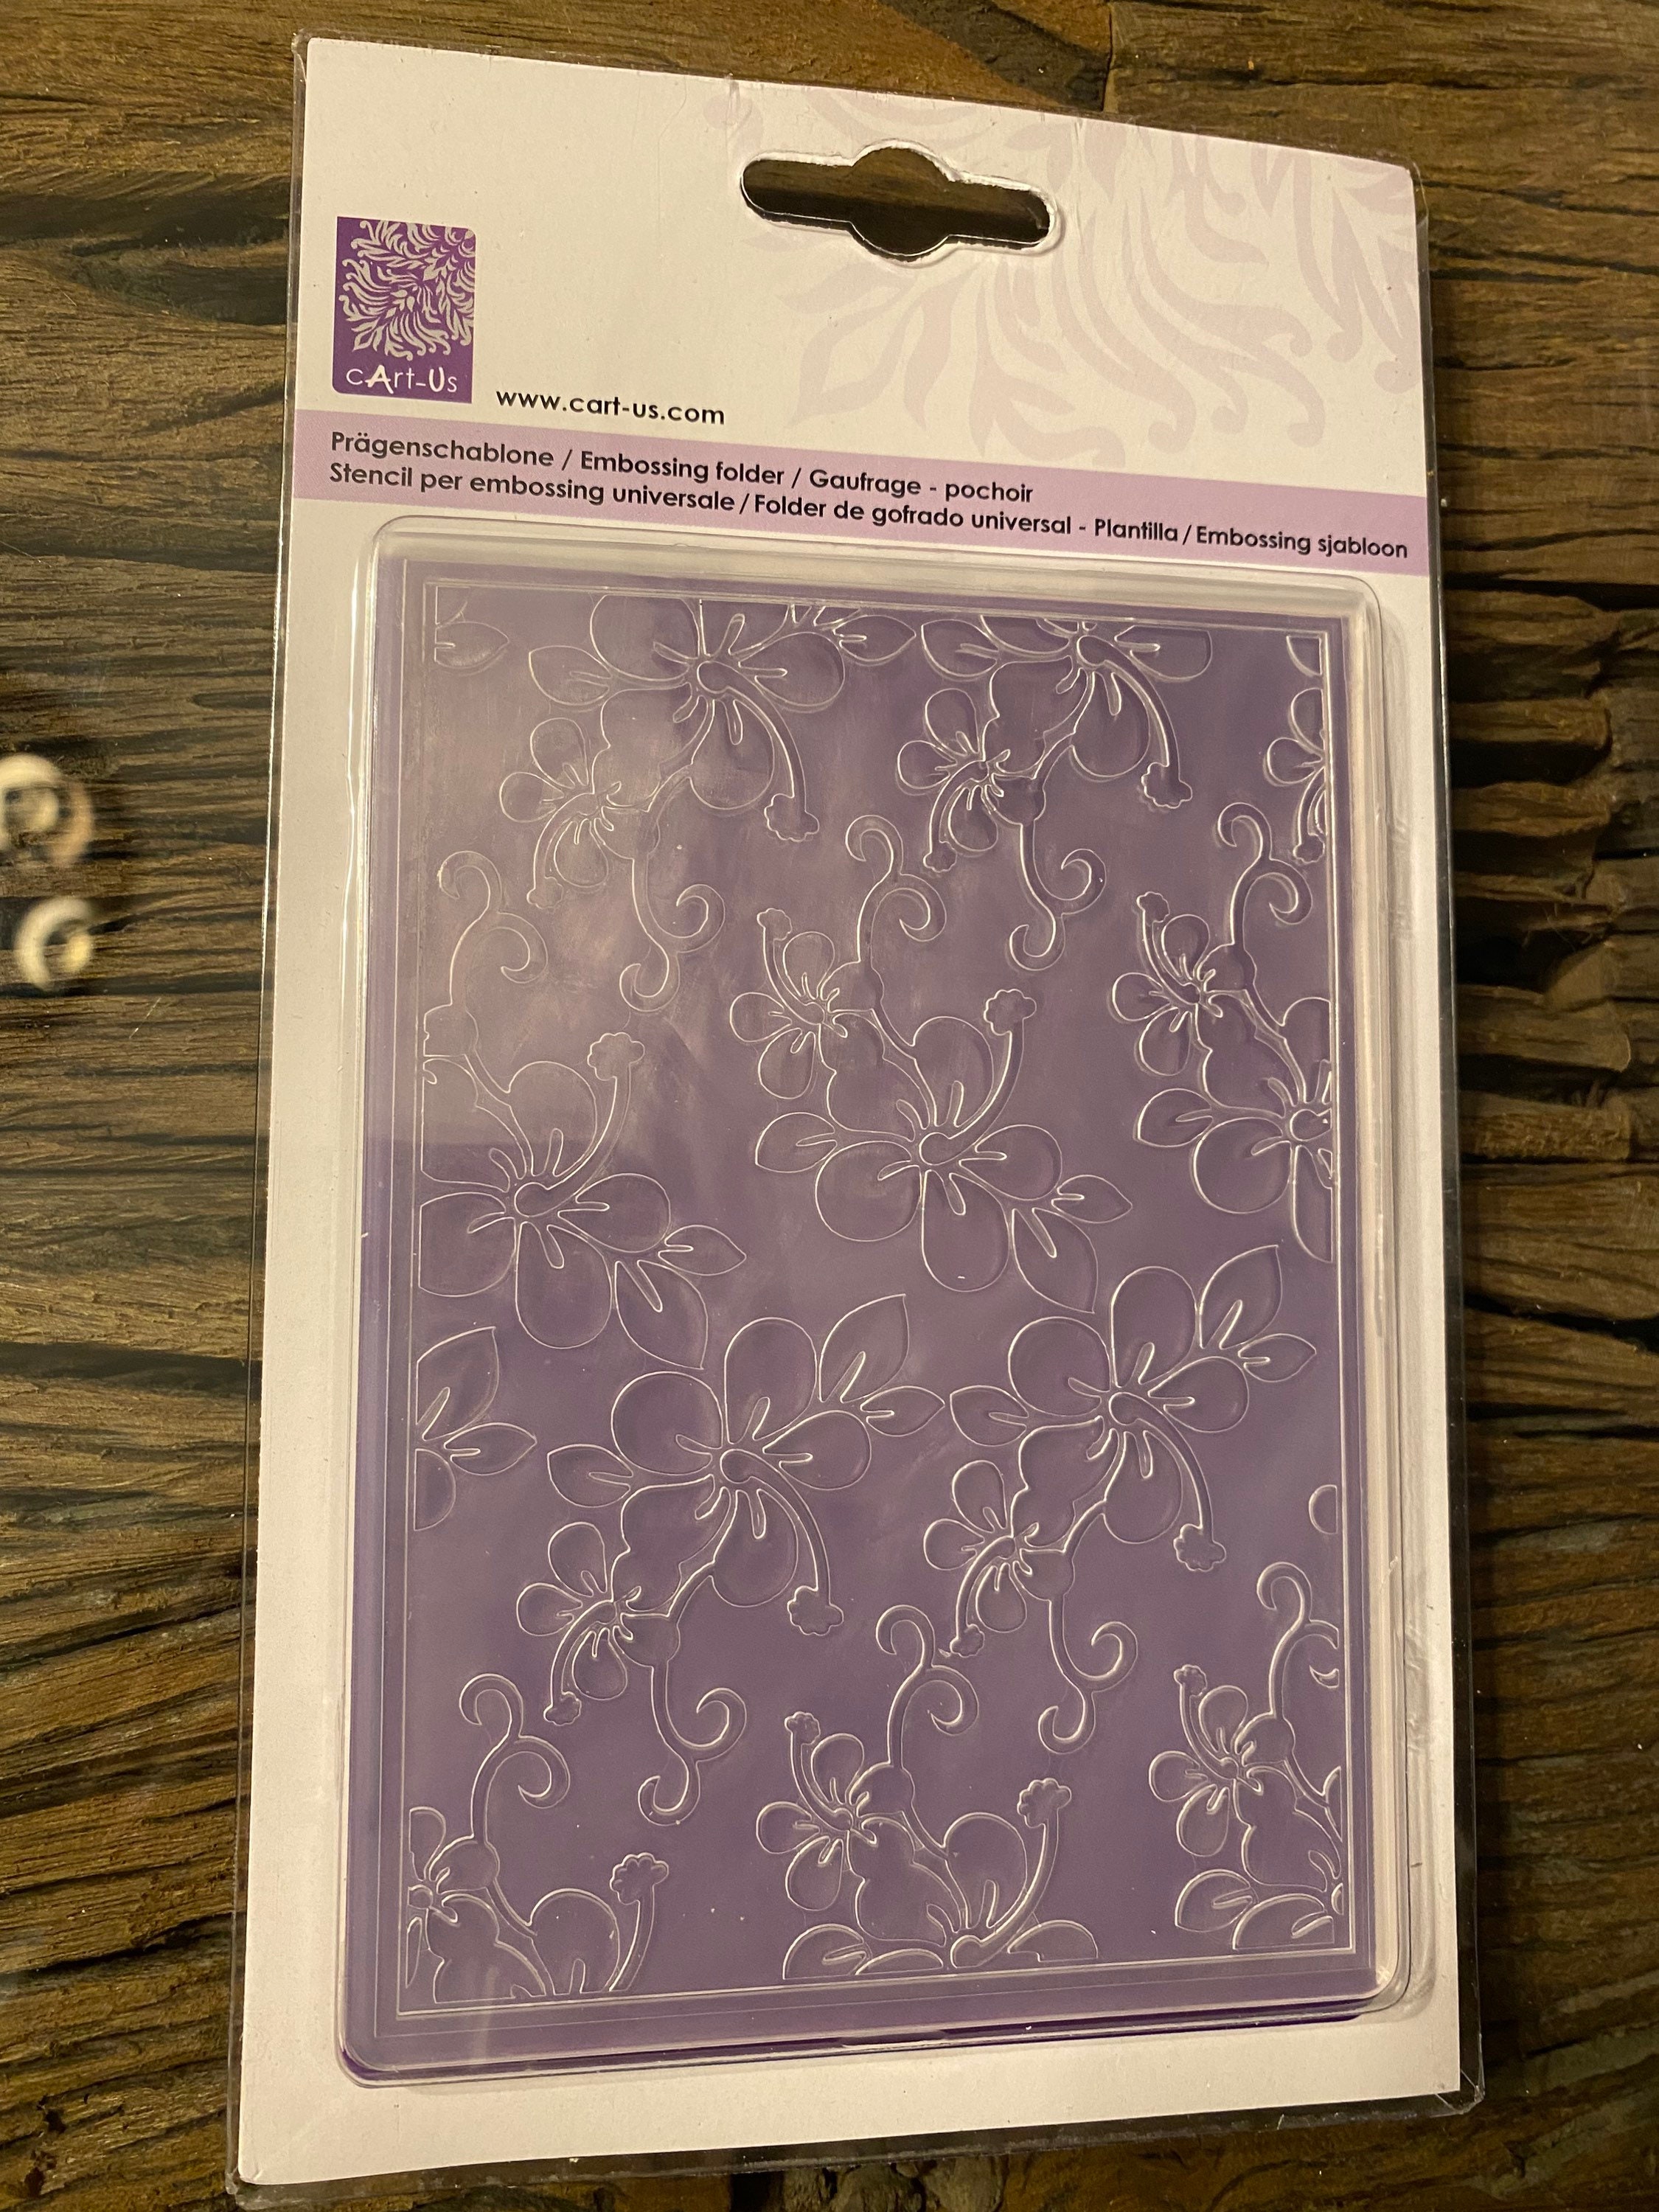 Cricut Cuttlebug Embossing Folders New in Packaging James Set and  Decorative Tile Set 8 Total Folder Plates 